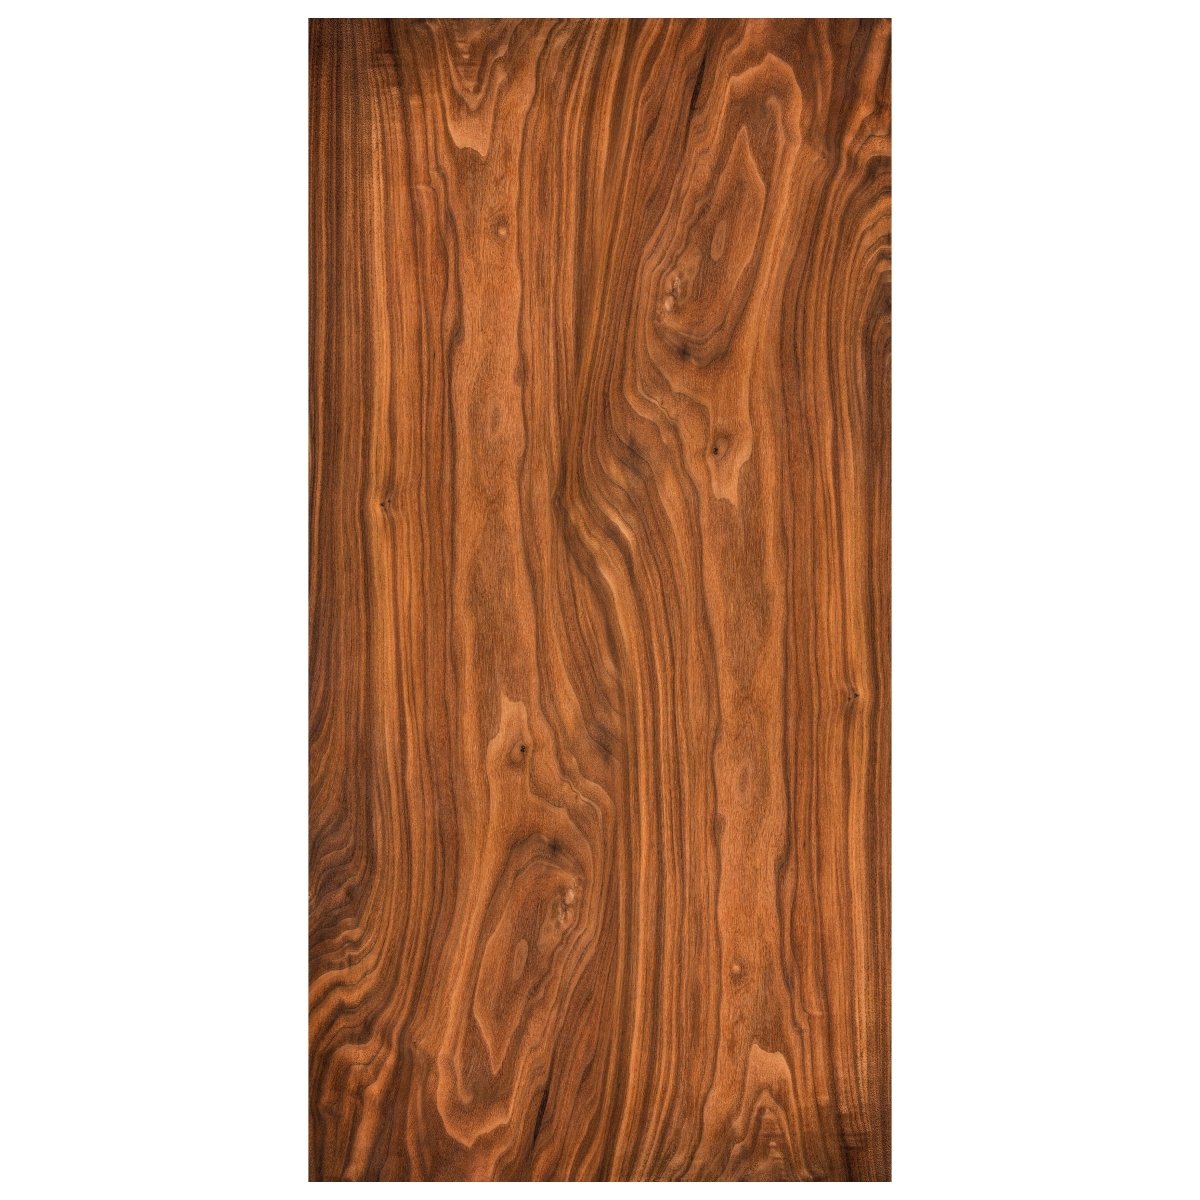 Türtapete rustikale Holzplatte, Holz, Maserung M1176 - Bild 2